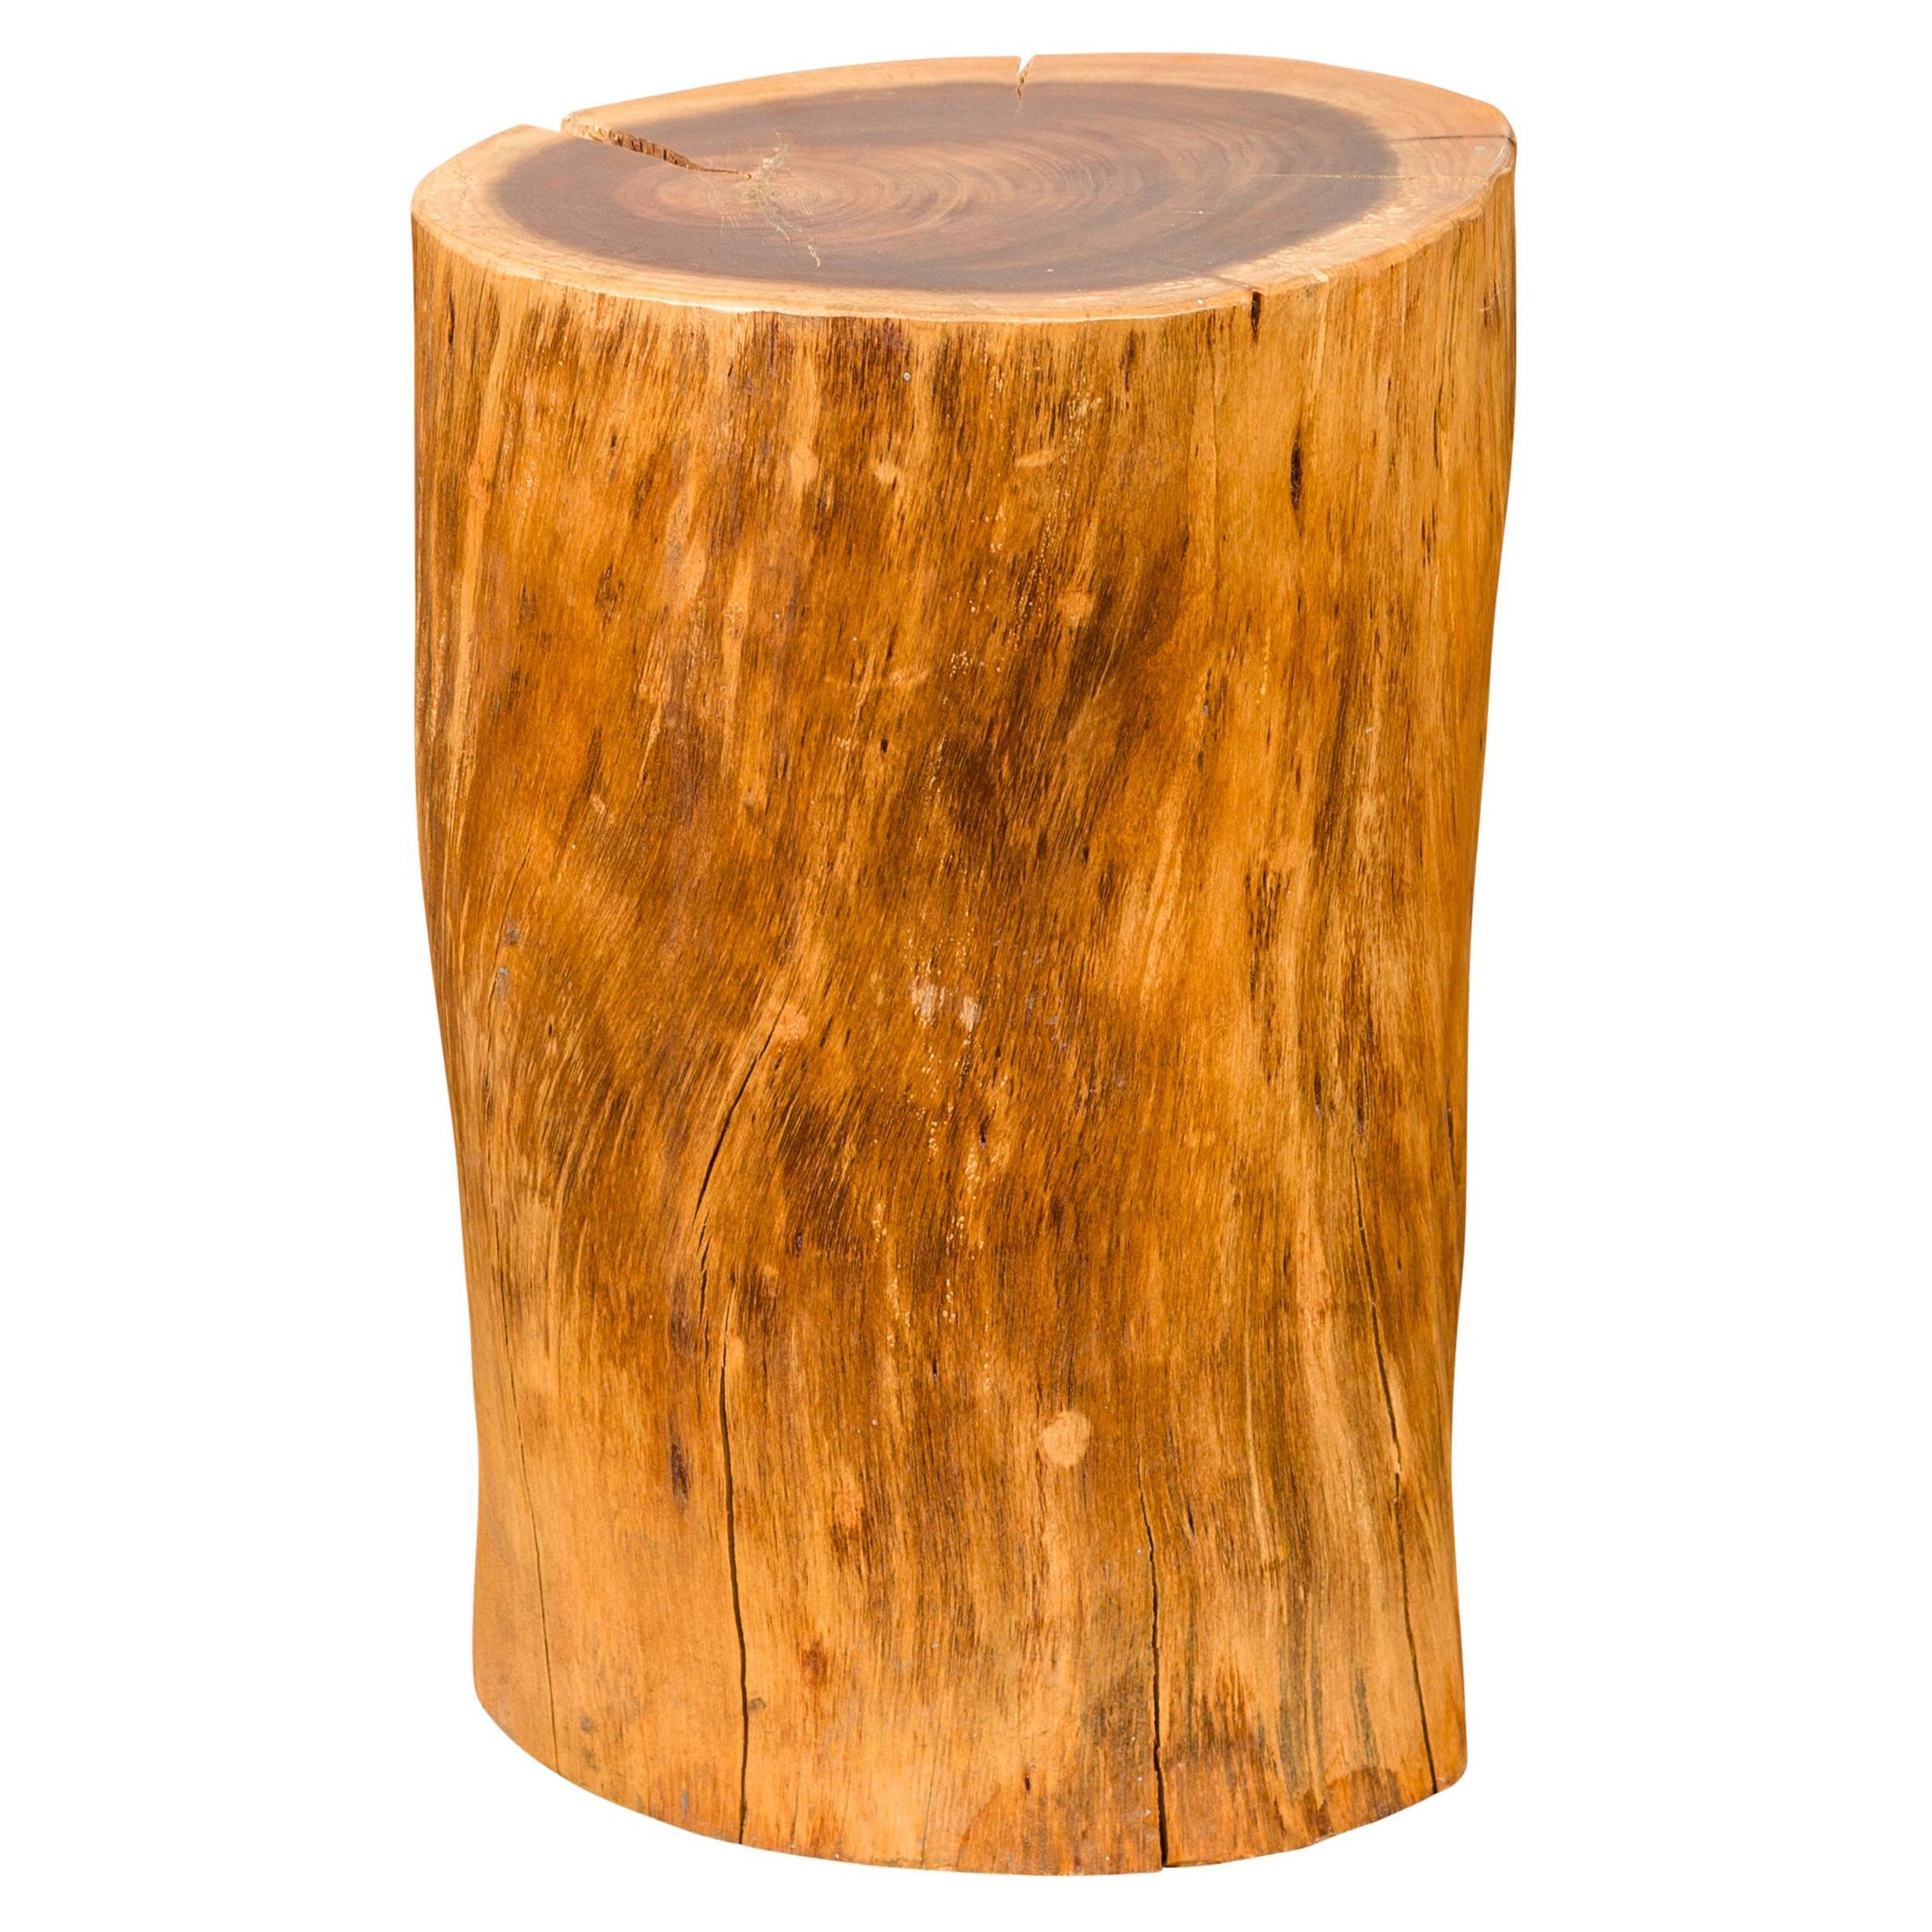 Robust Midcentury Rustic Tree Stump Pedestal, Stool or Drinks Table For Sale